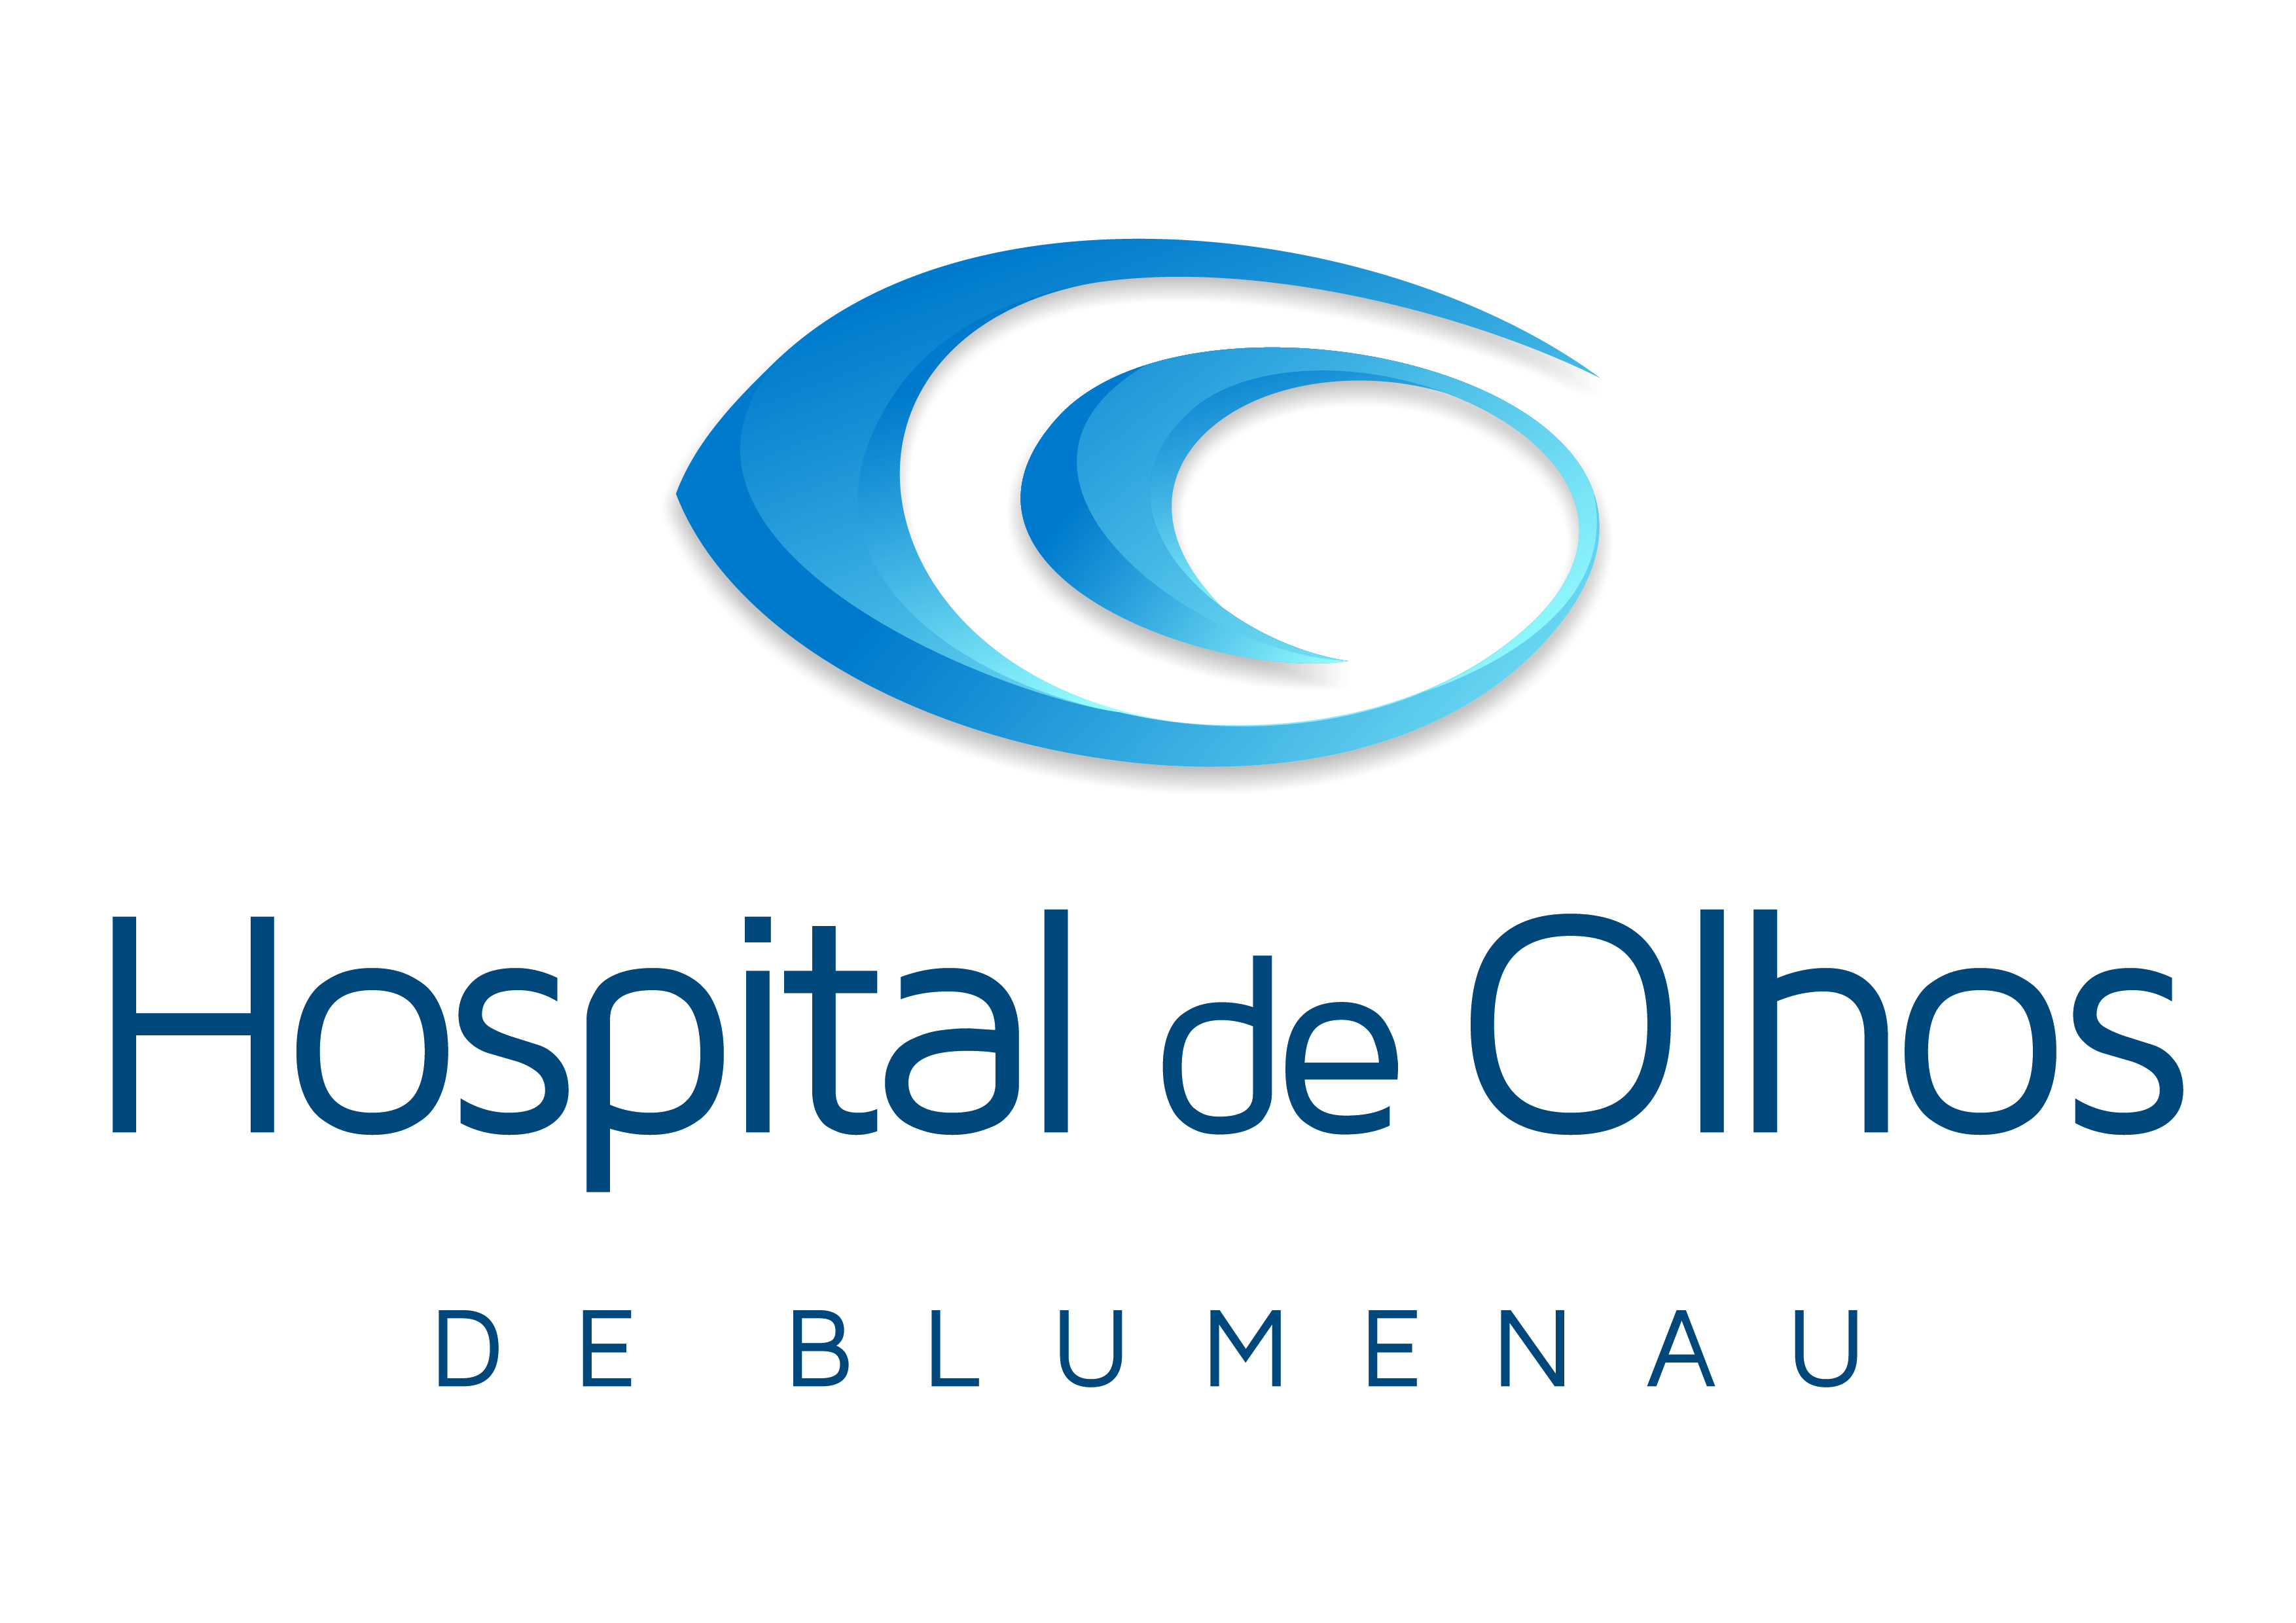 HOSPITAL DE OLHOS DE BLUMENAU